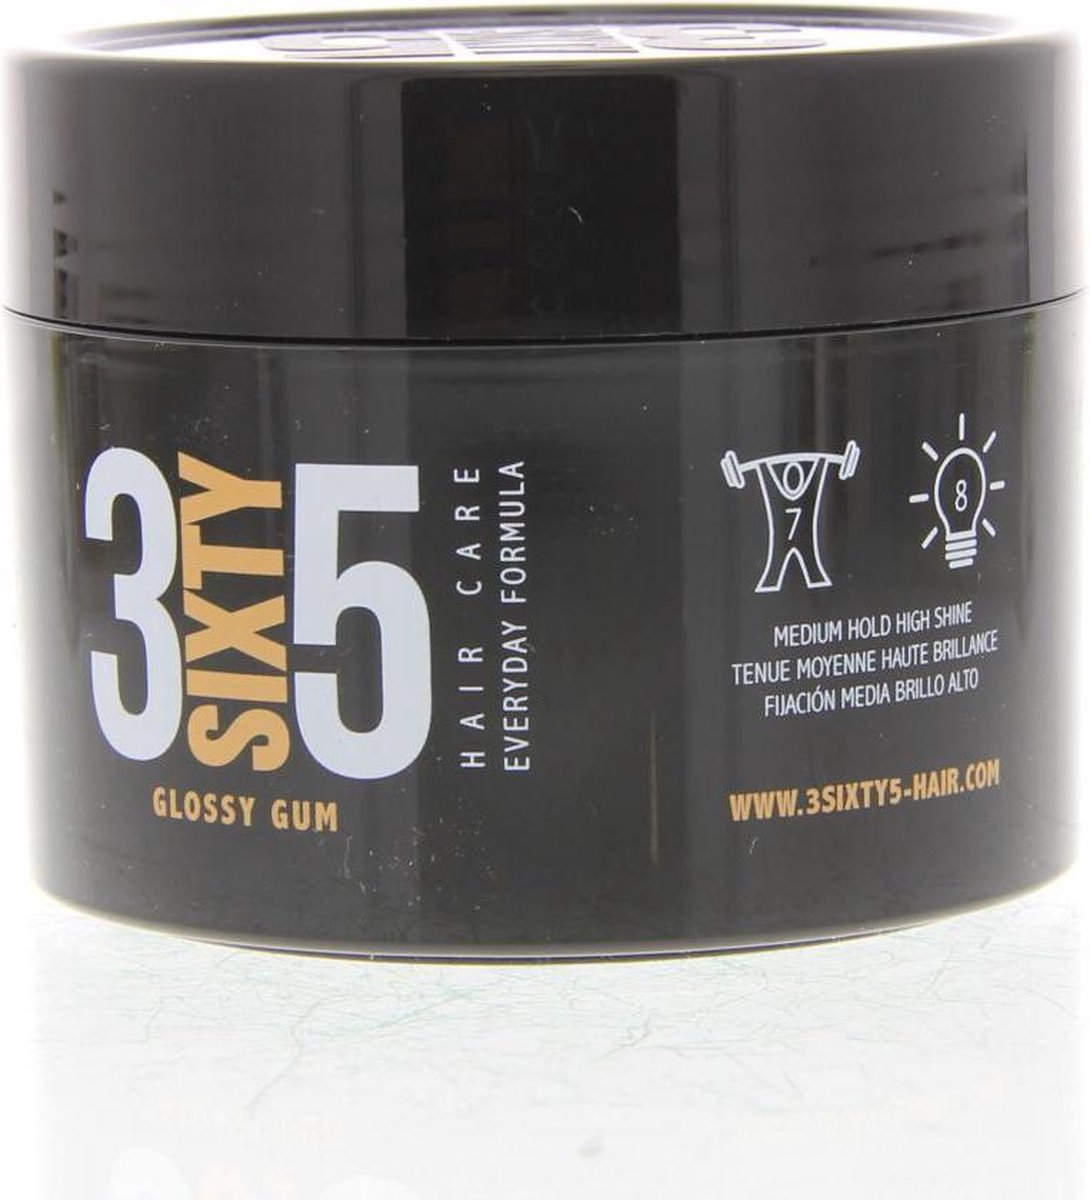 3SIXTY5 - Glossy Gum 75ml